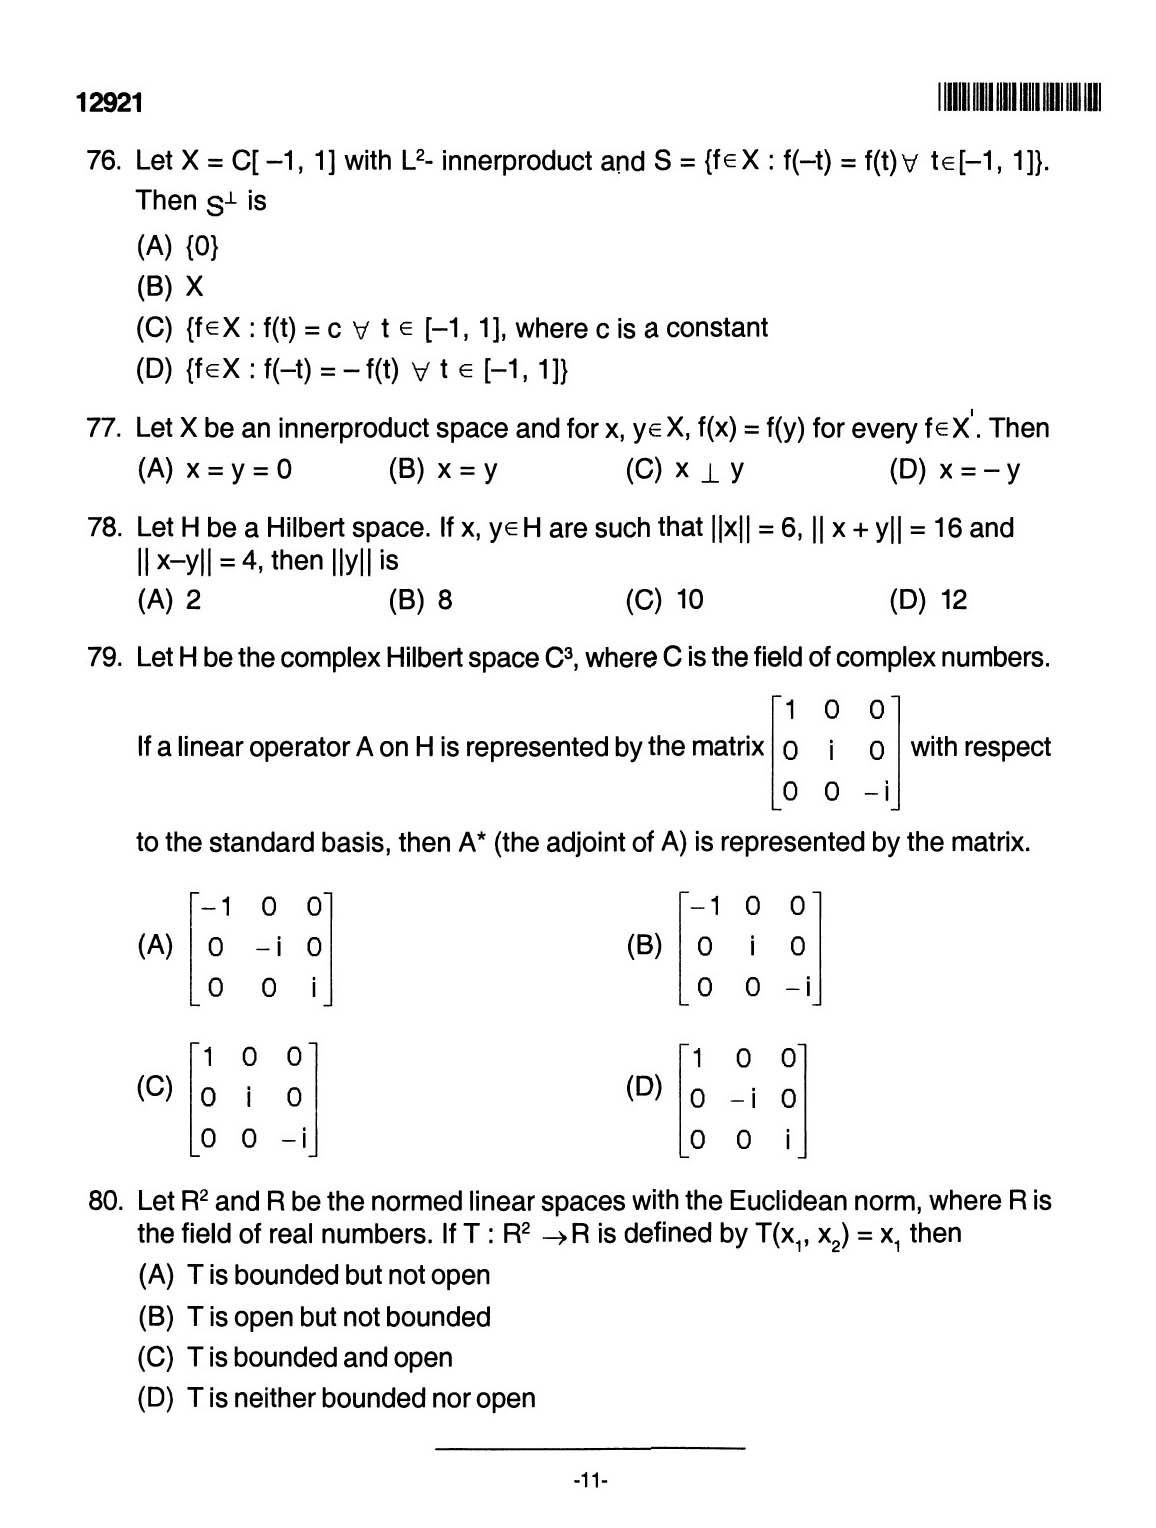 Kerala SET Mathematics Exam 2012 Question Code 12921 11